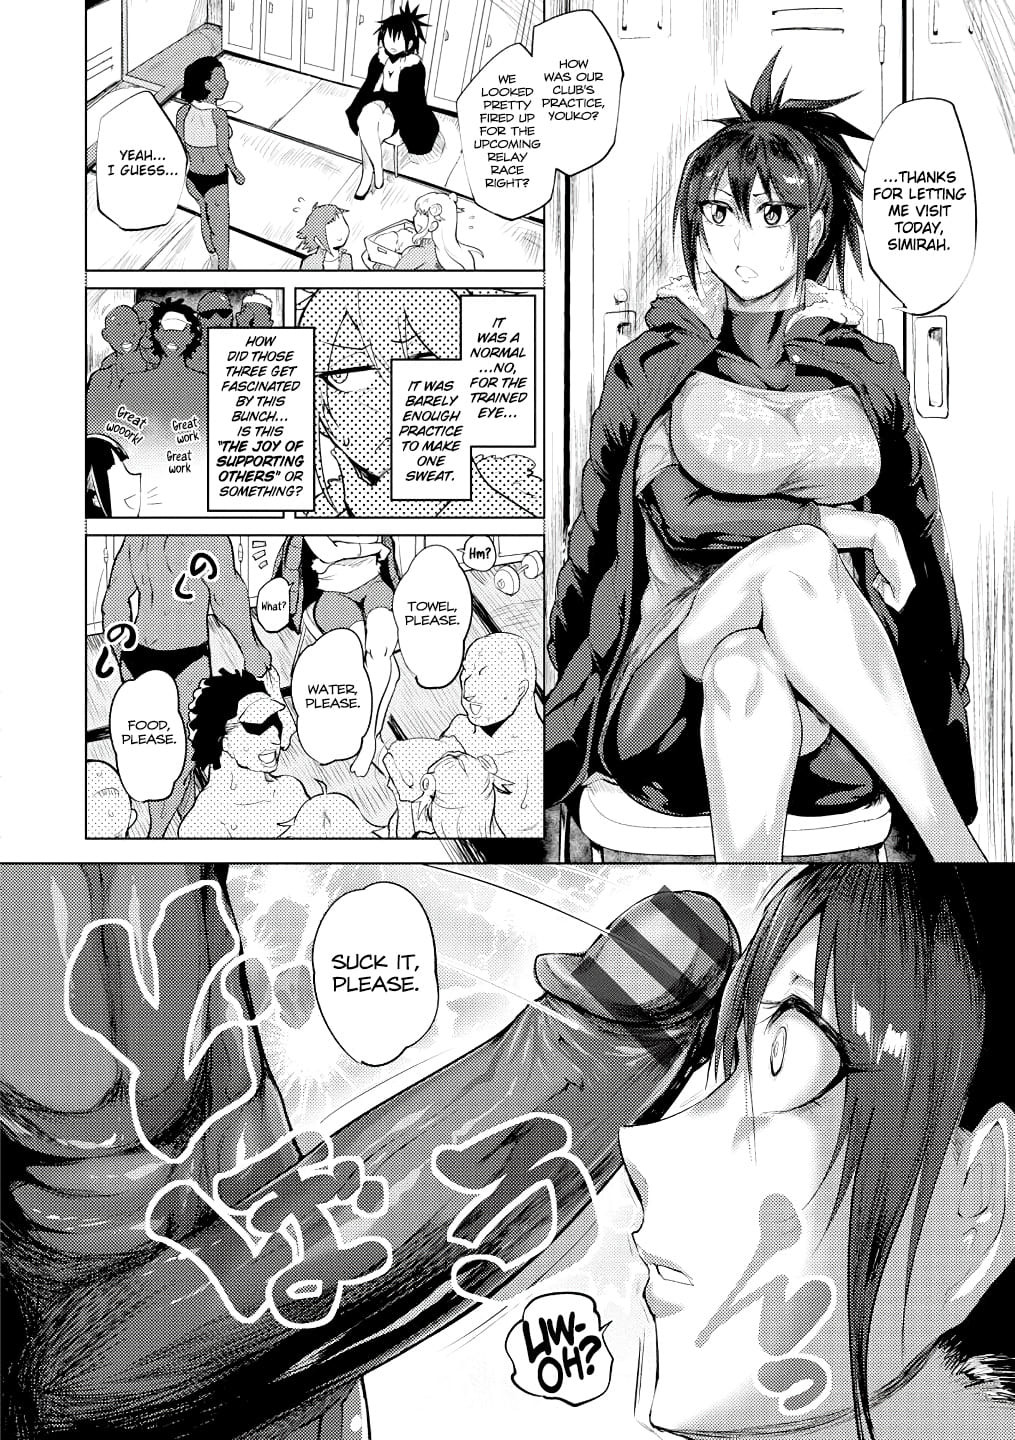 Massive cock manga